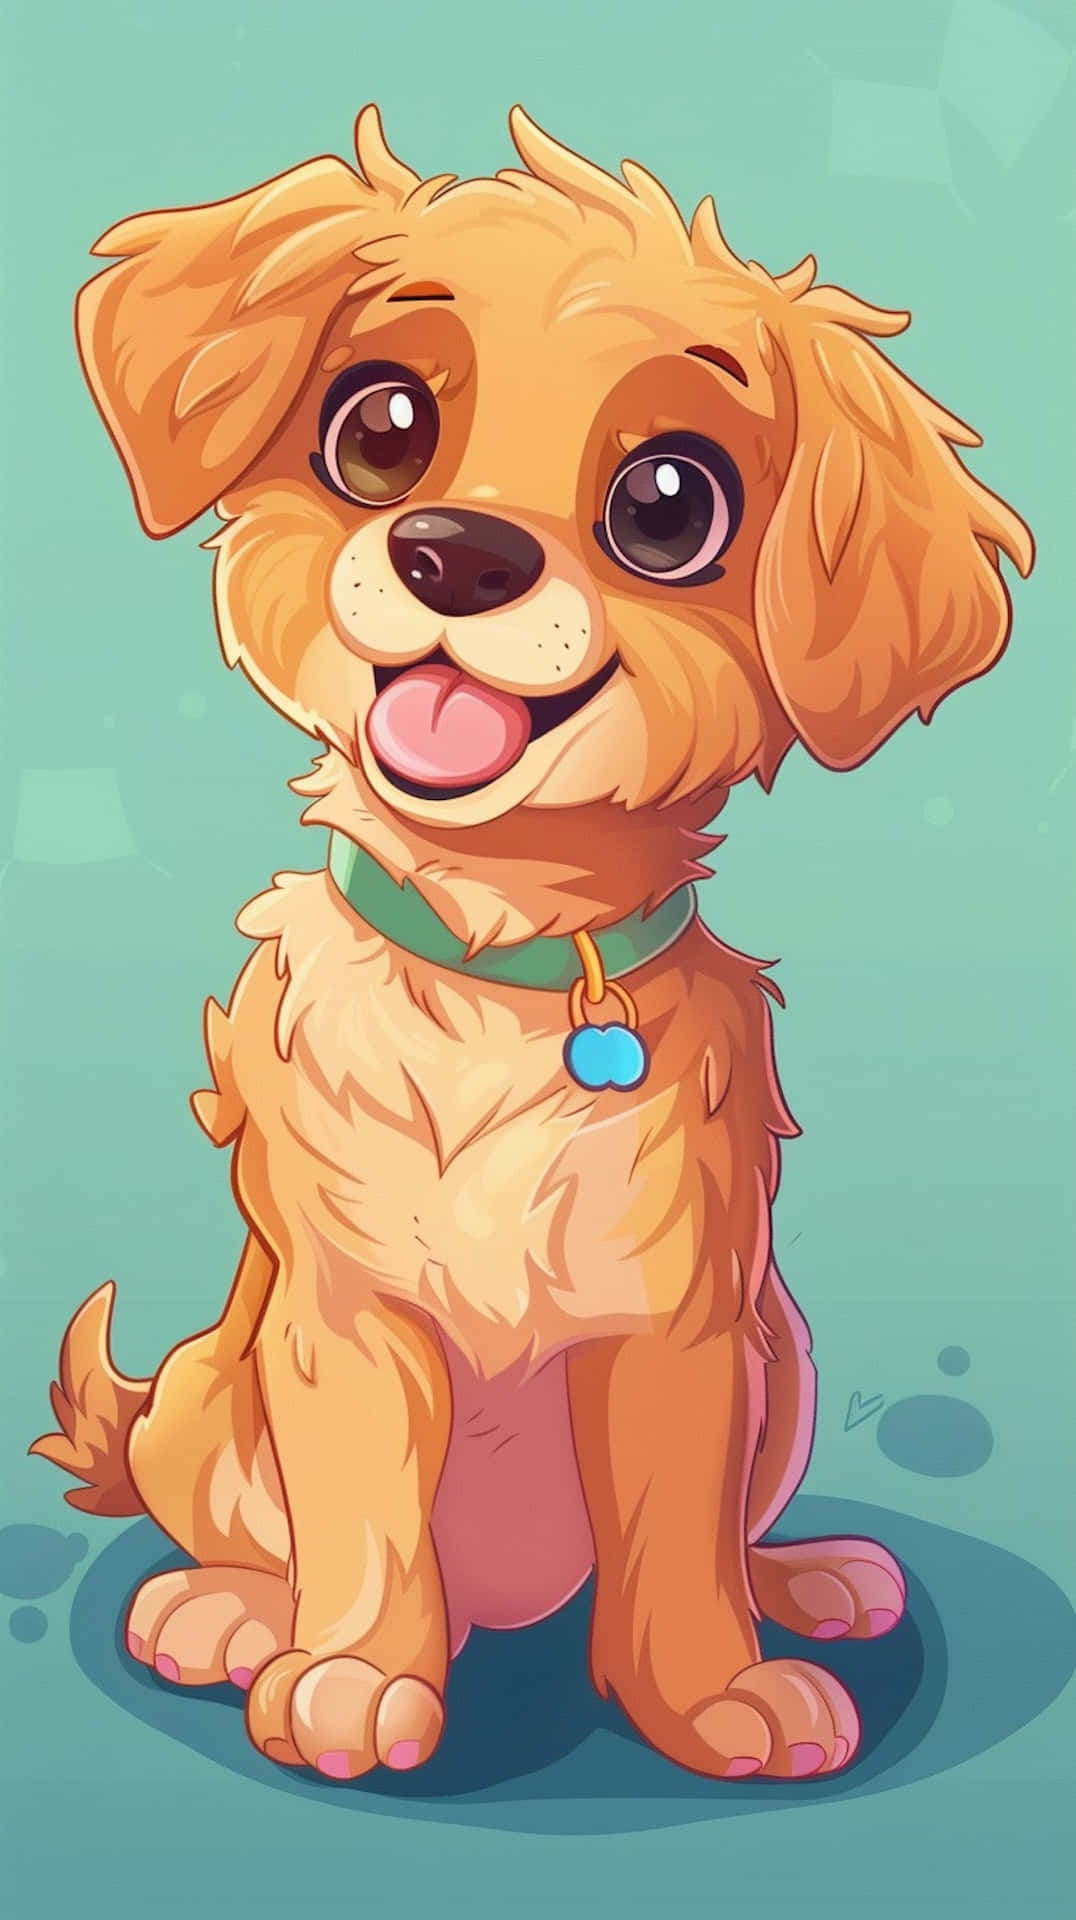 Adorable Anime Puppy Illustration.jpg Wallpaper